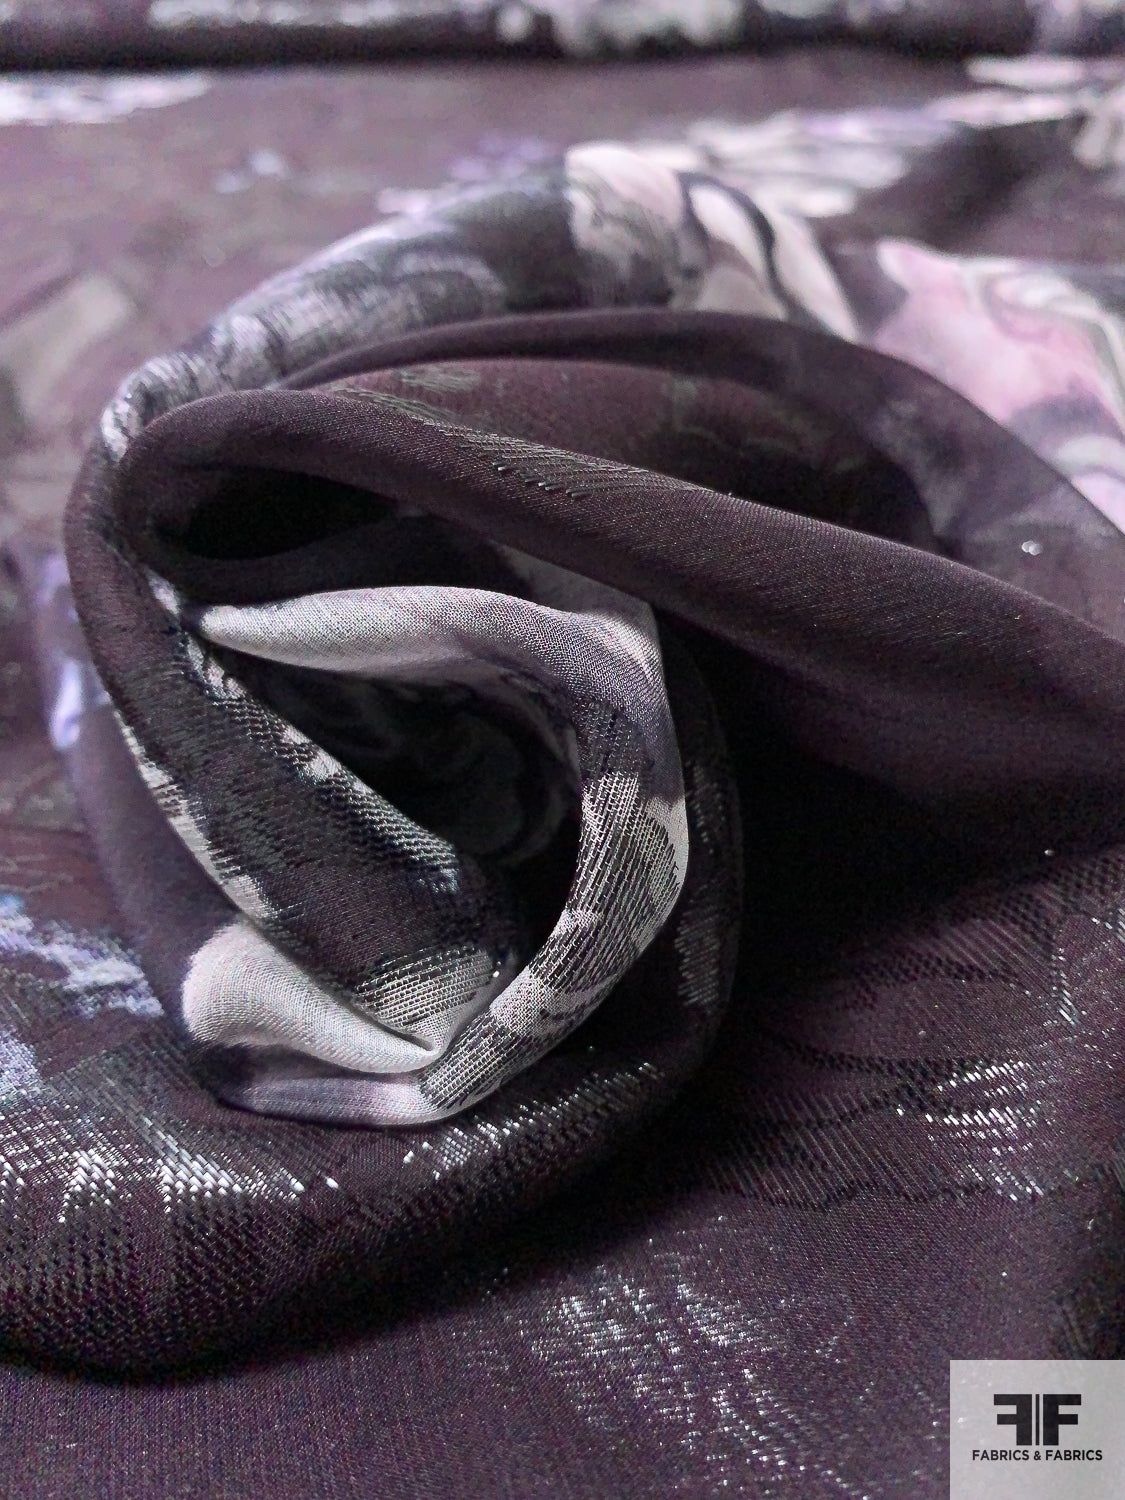 Metallic Romantic Dreamy Floral Printed Silk Chiffon - Midnight Purple / Soft Purples